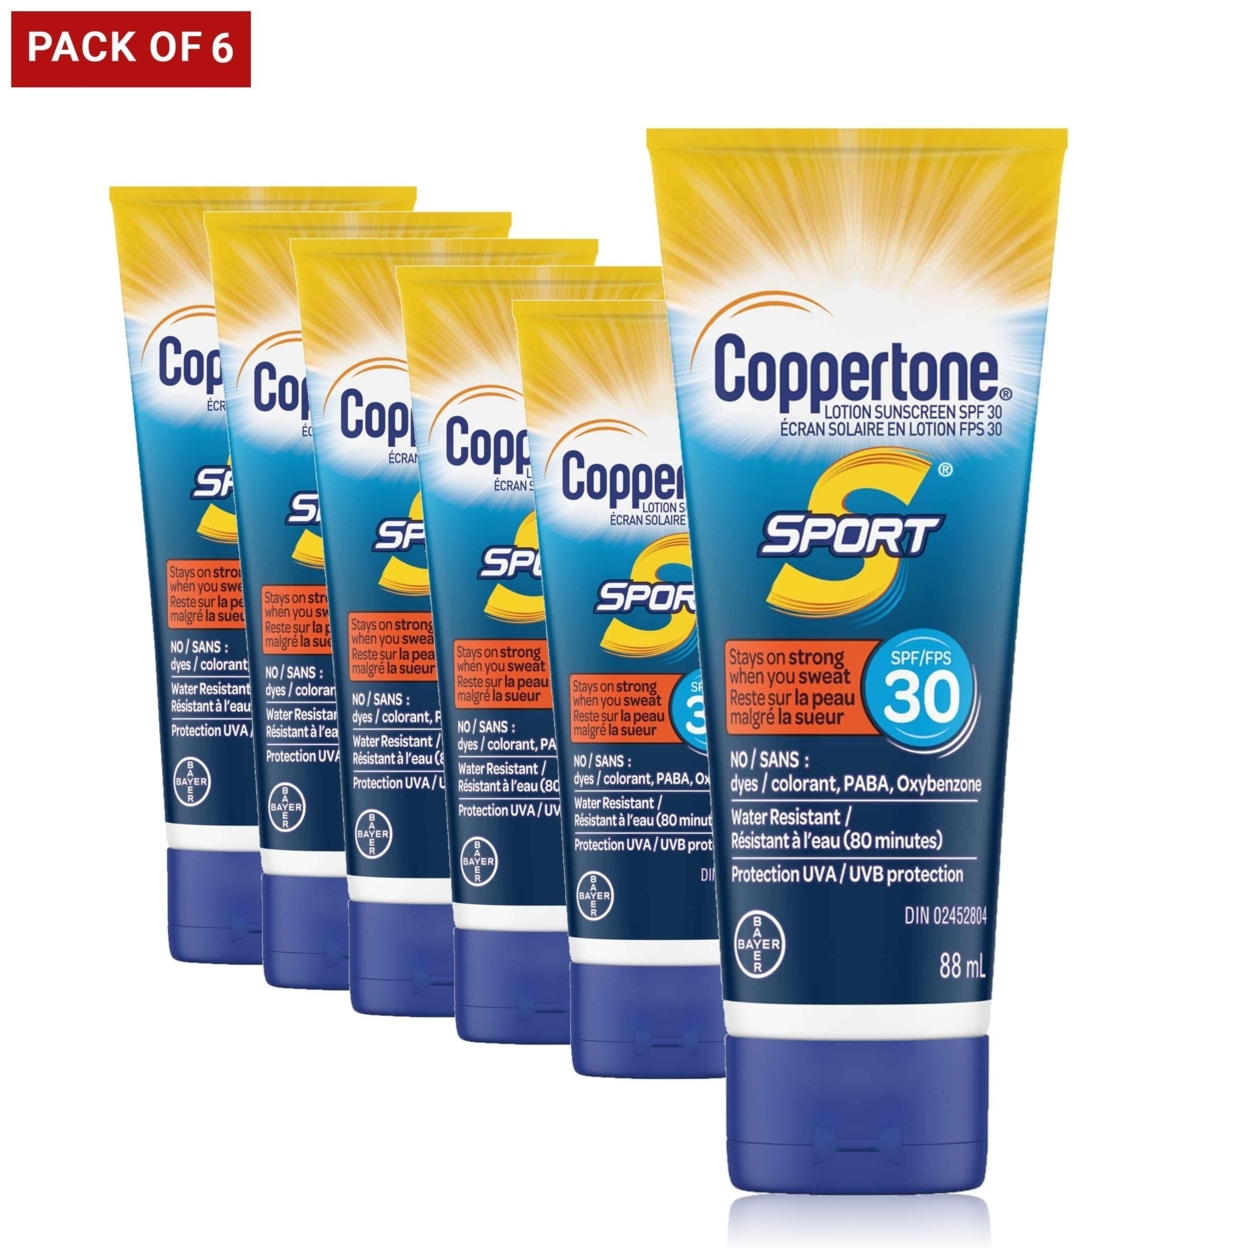 Coppertone Sport SPF30 Sunscreen 89mL, Pack of 6